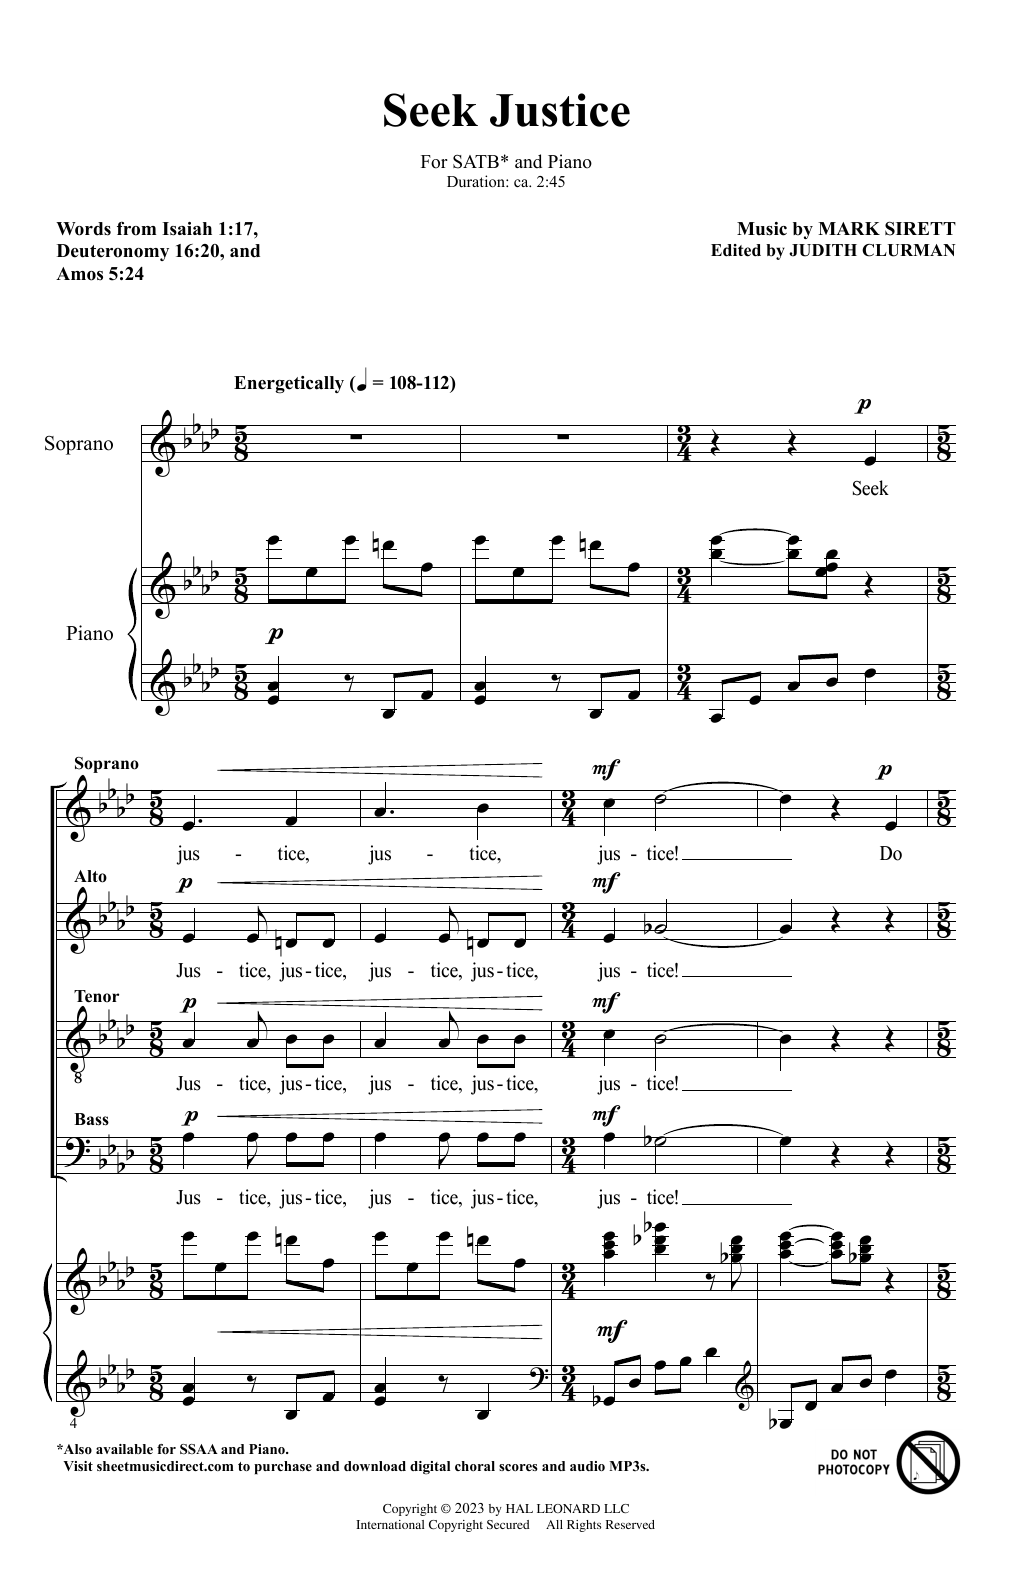 Download Mark Sirett Seek Justice Sheet Music and learn how to play TTBB Choir PDF digital score in minutes